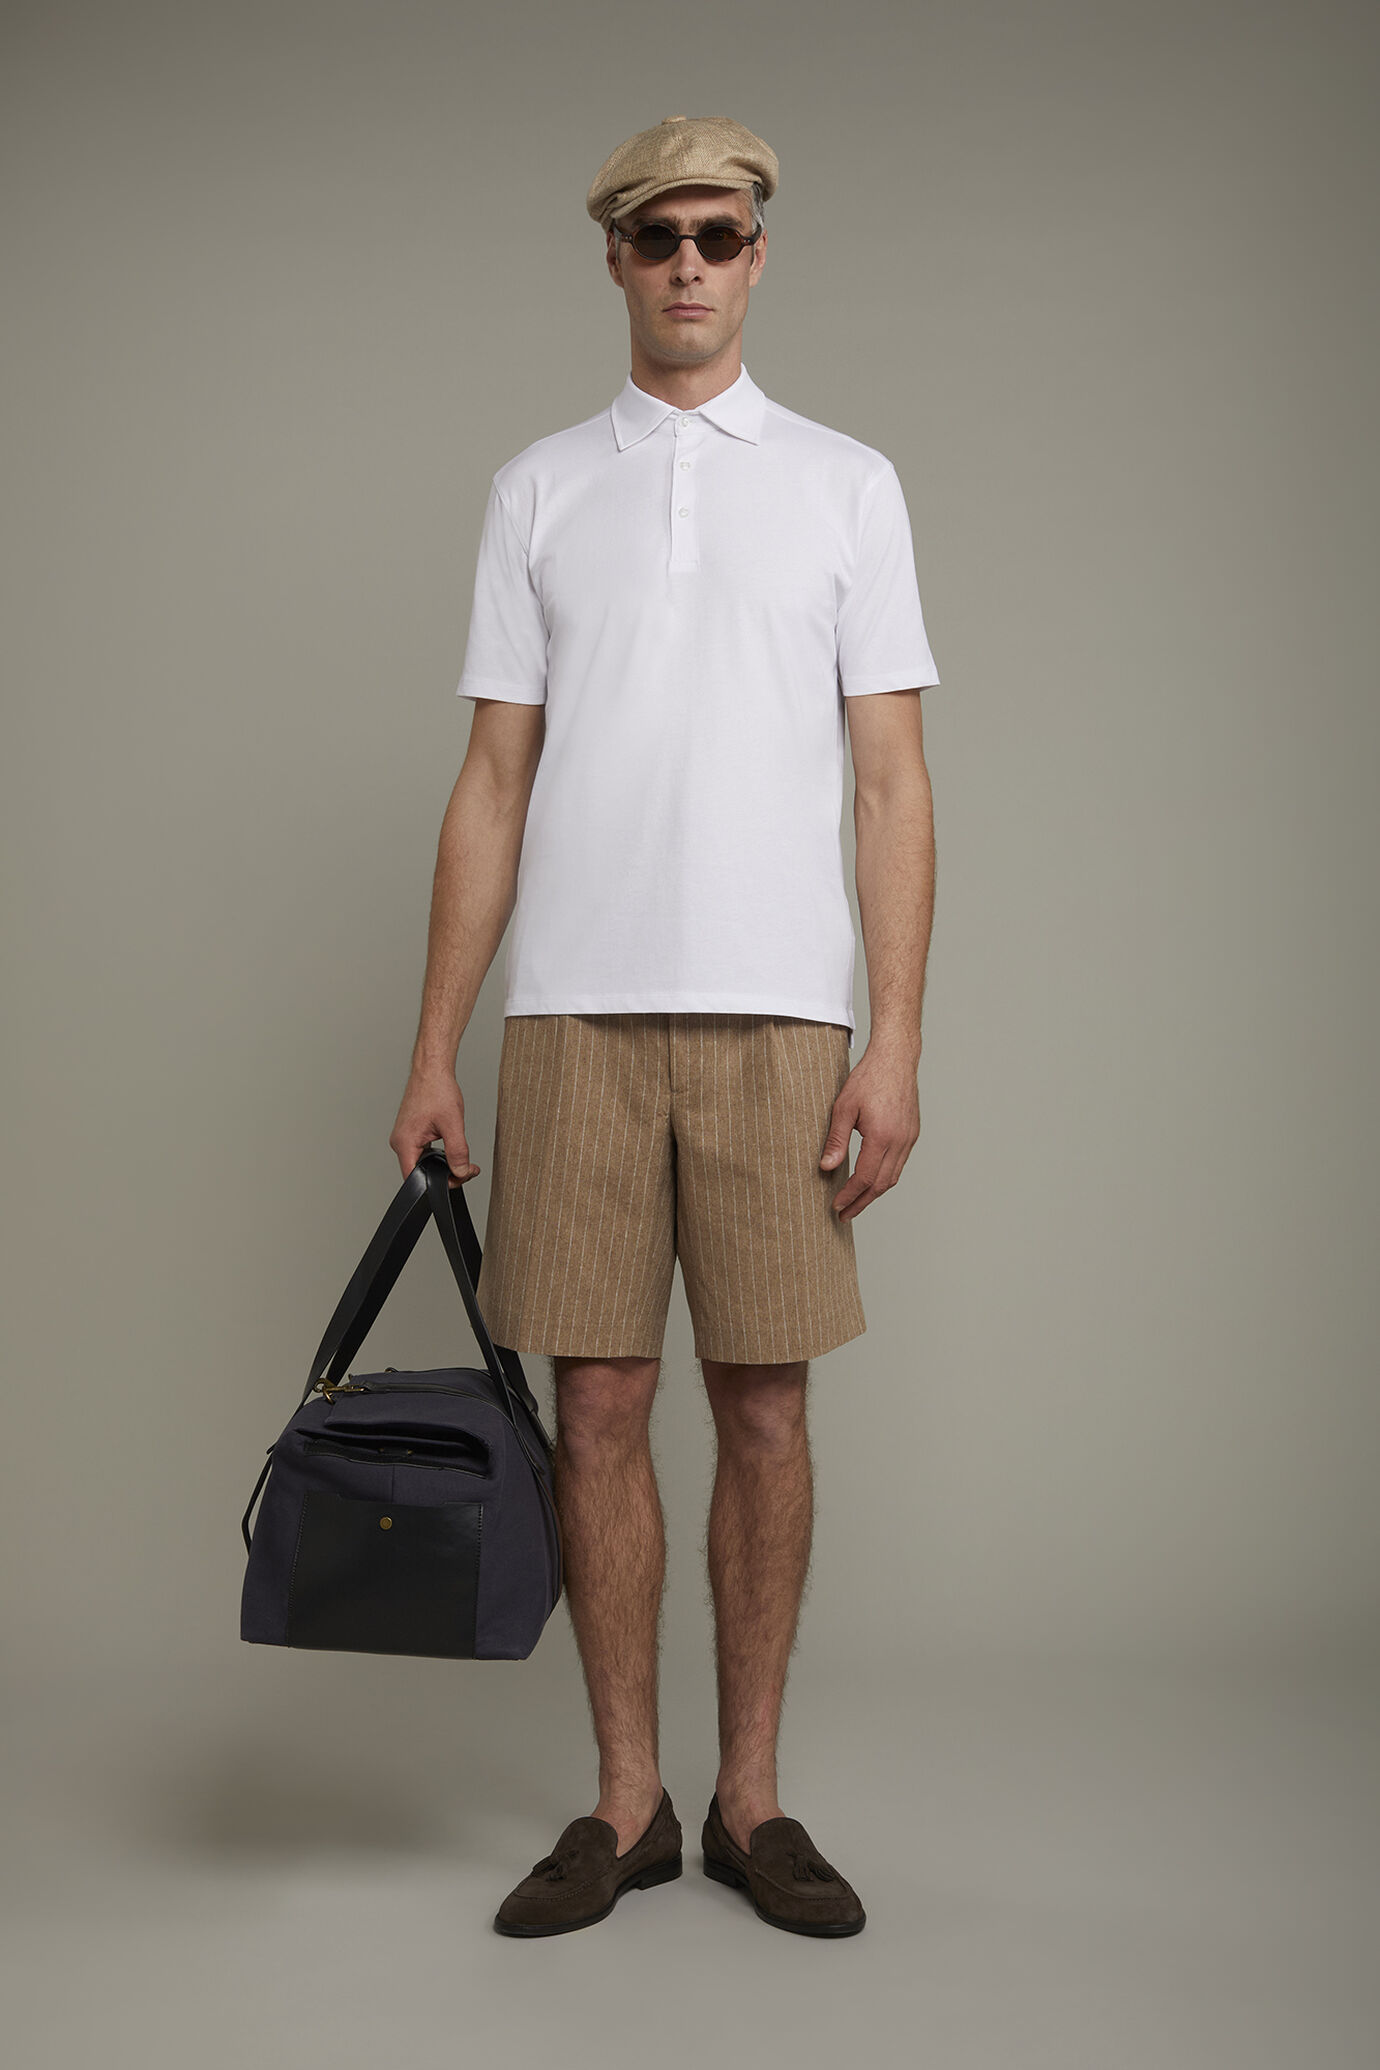 Men’s polo shirt short sleeves 100% supima cotton regular fit